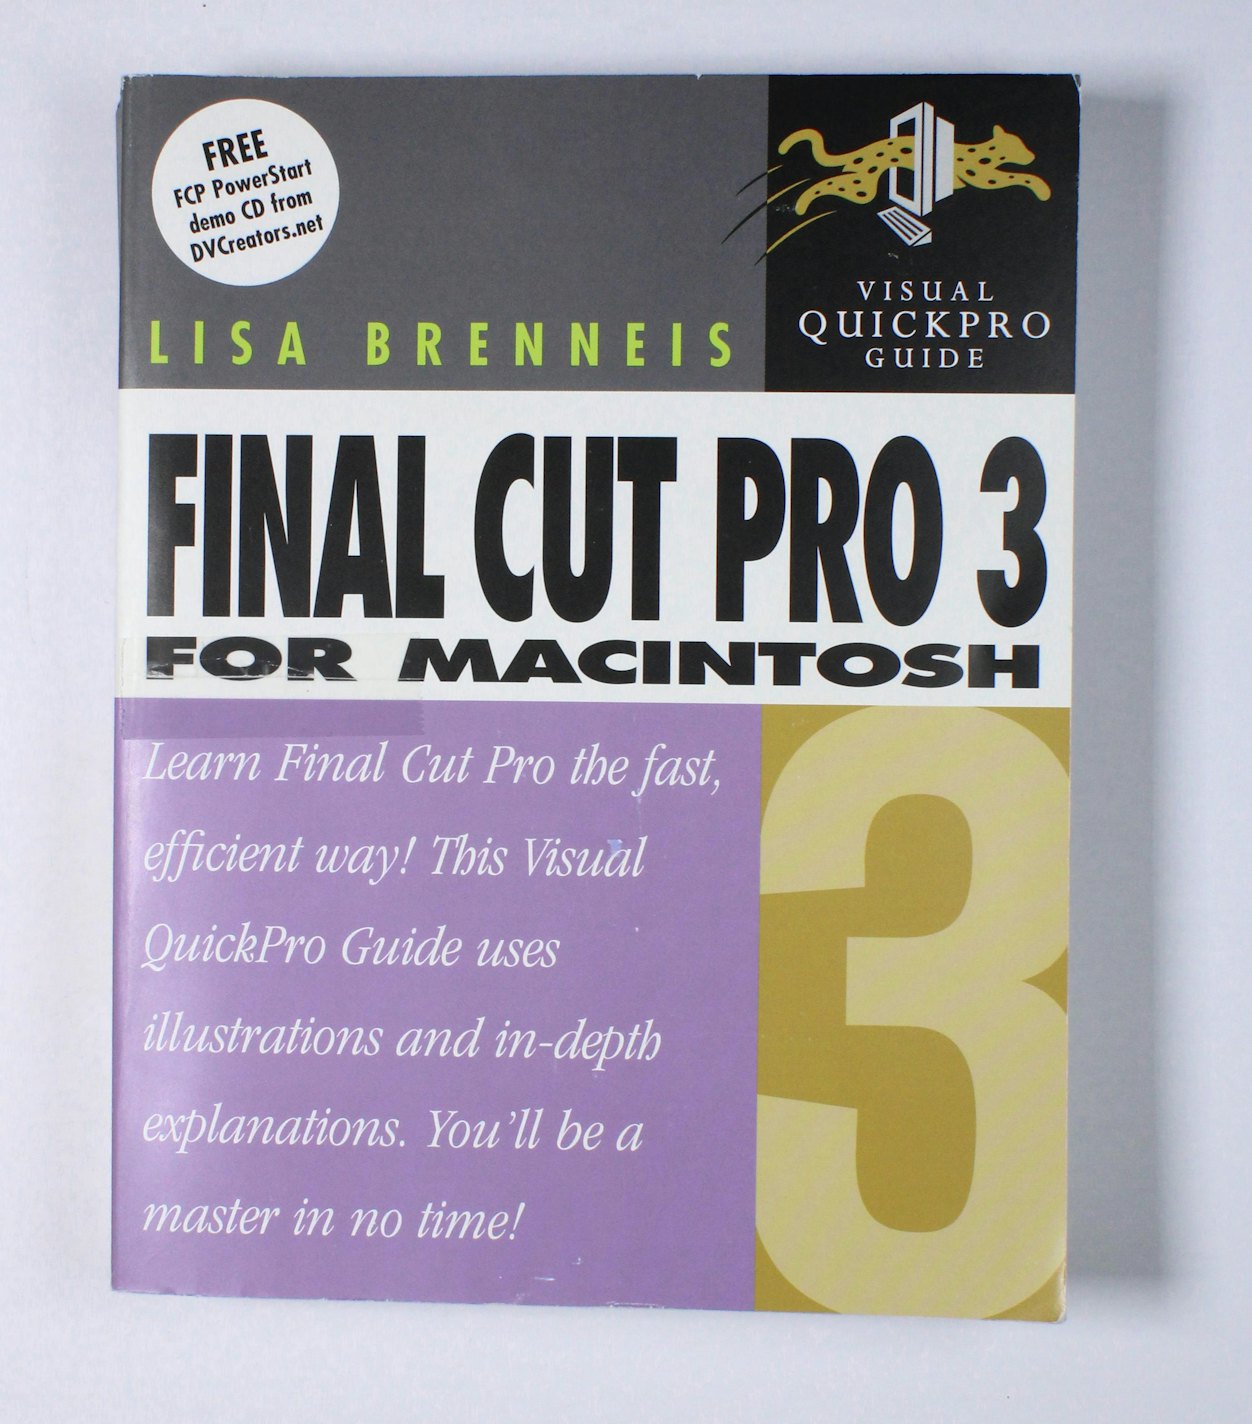 Final Cut Pro 3 for Macintosh